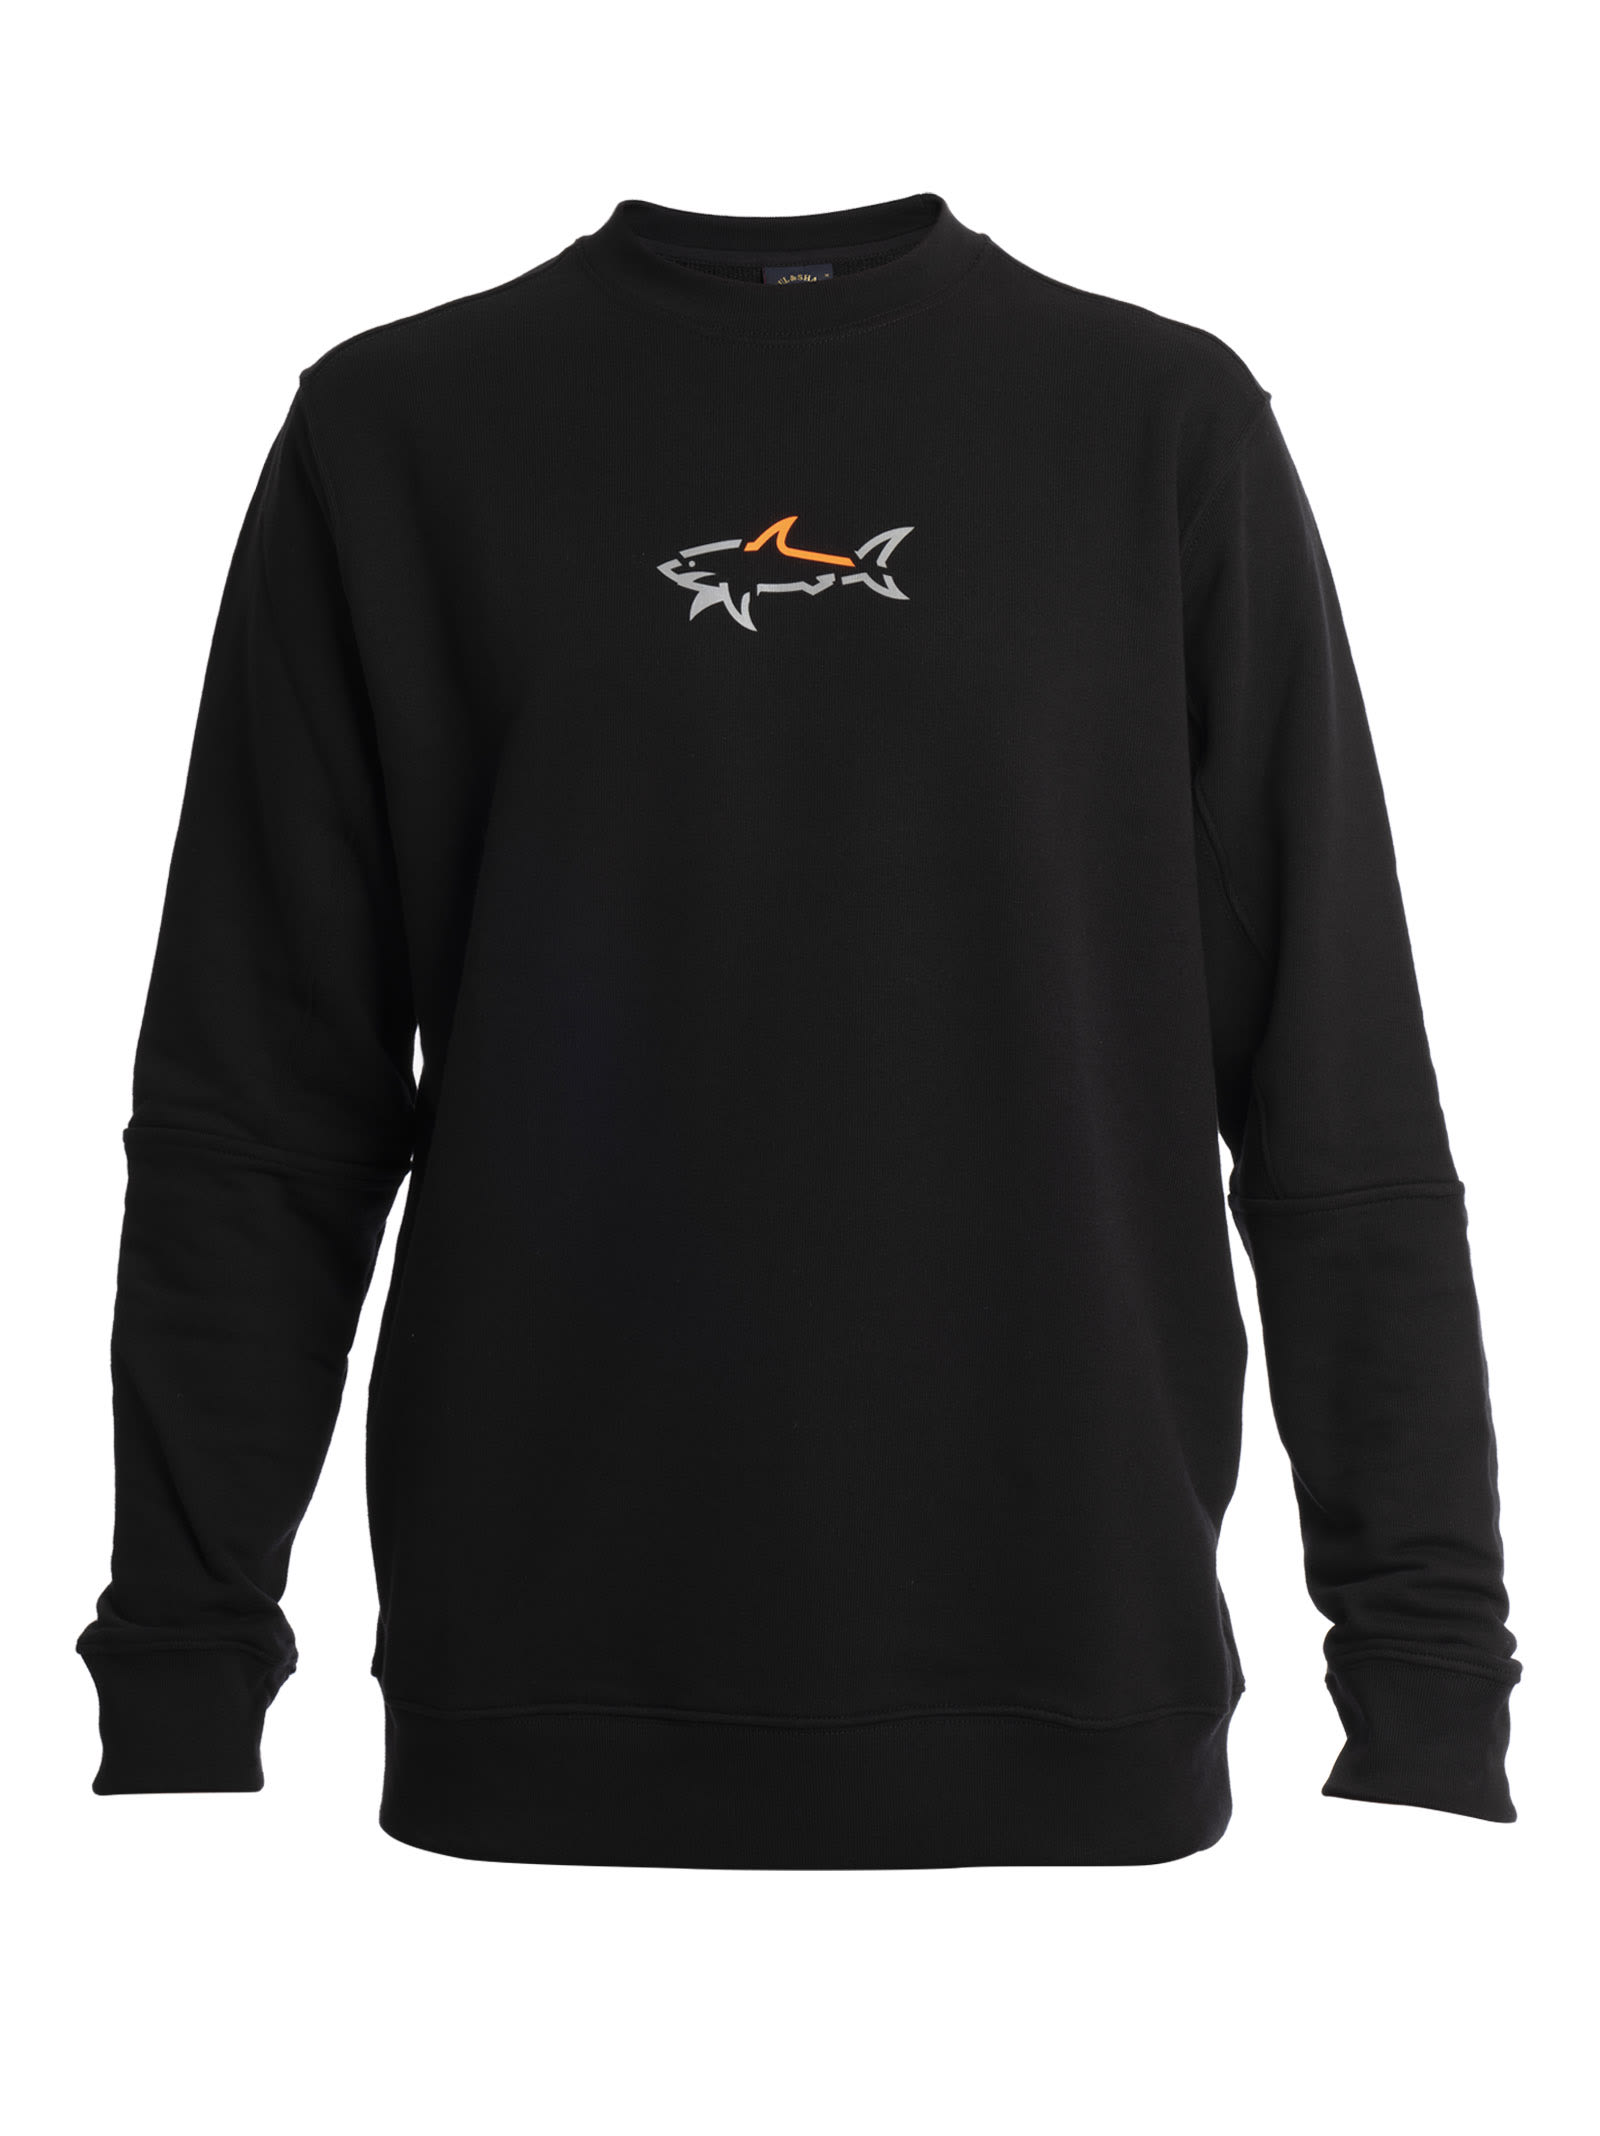 Paul & Shark Shark Print Sweatshirt